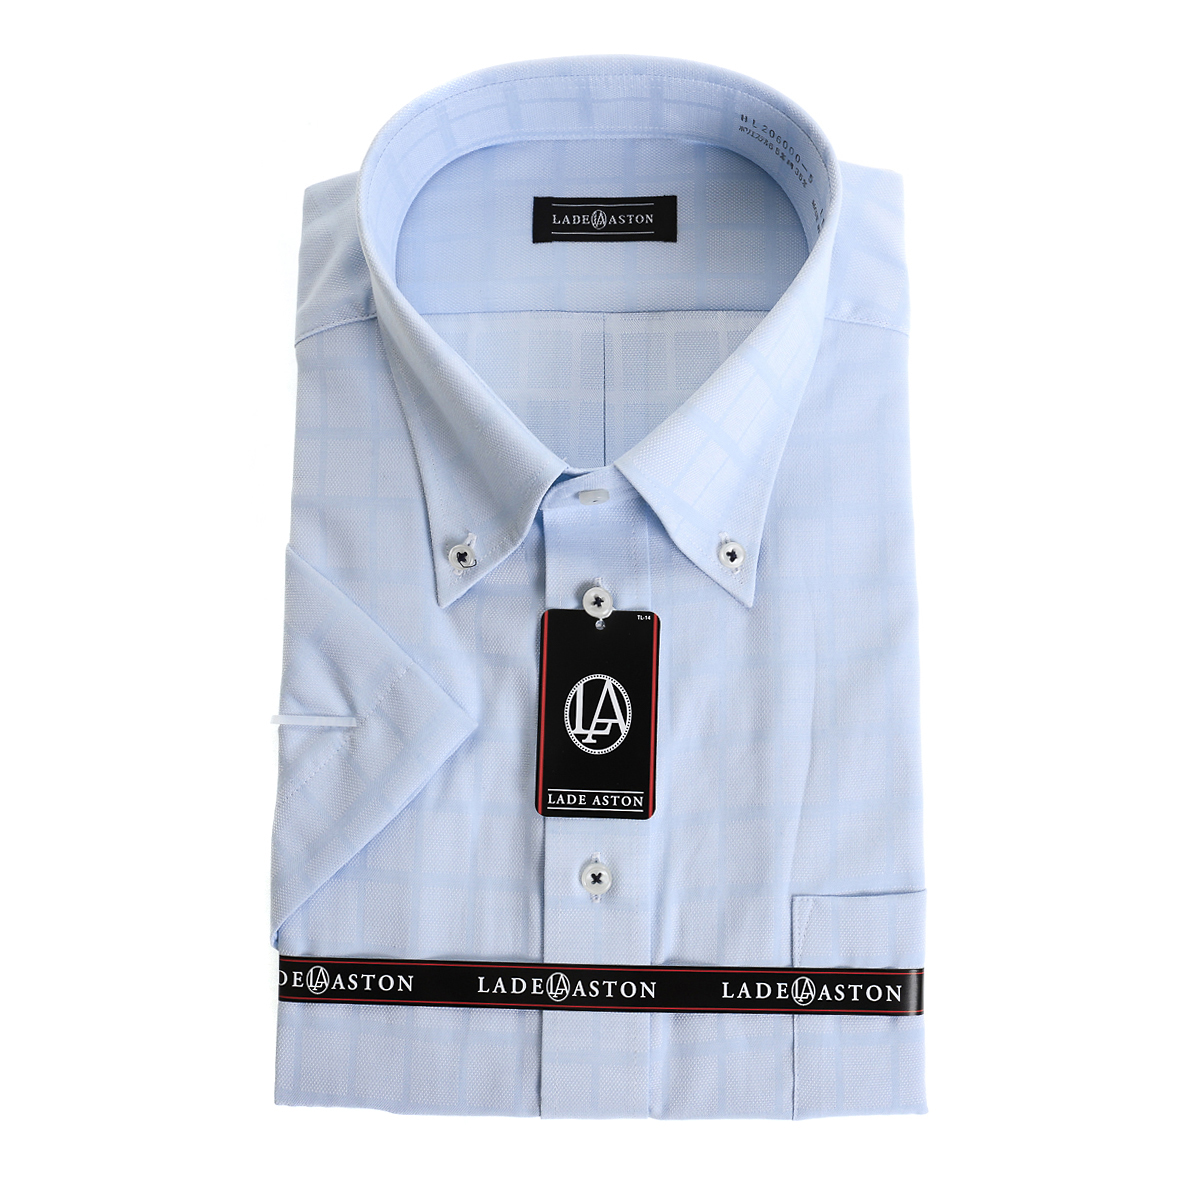 LADE ASTON | ワイシャツの卸・仕入れなら、オギタヘムト・オンライン